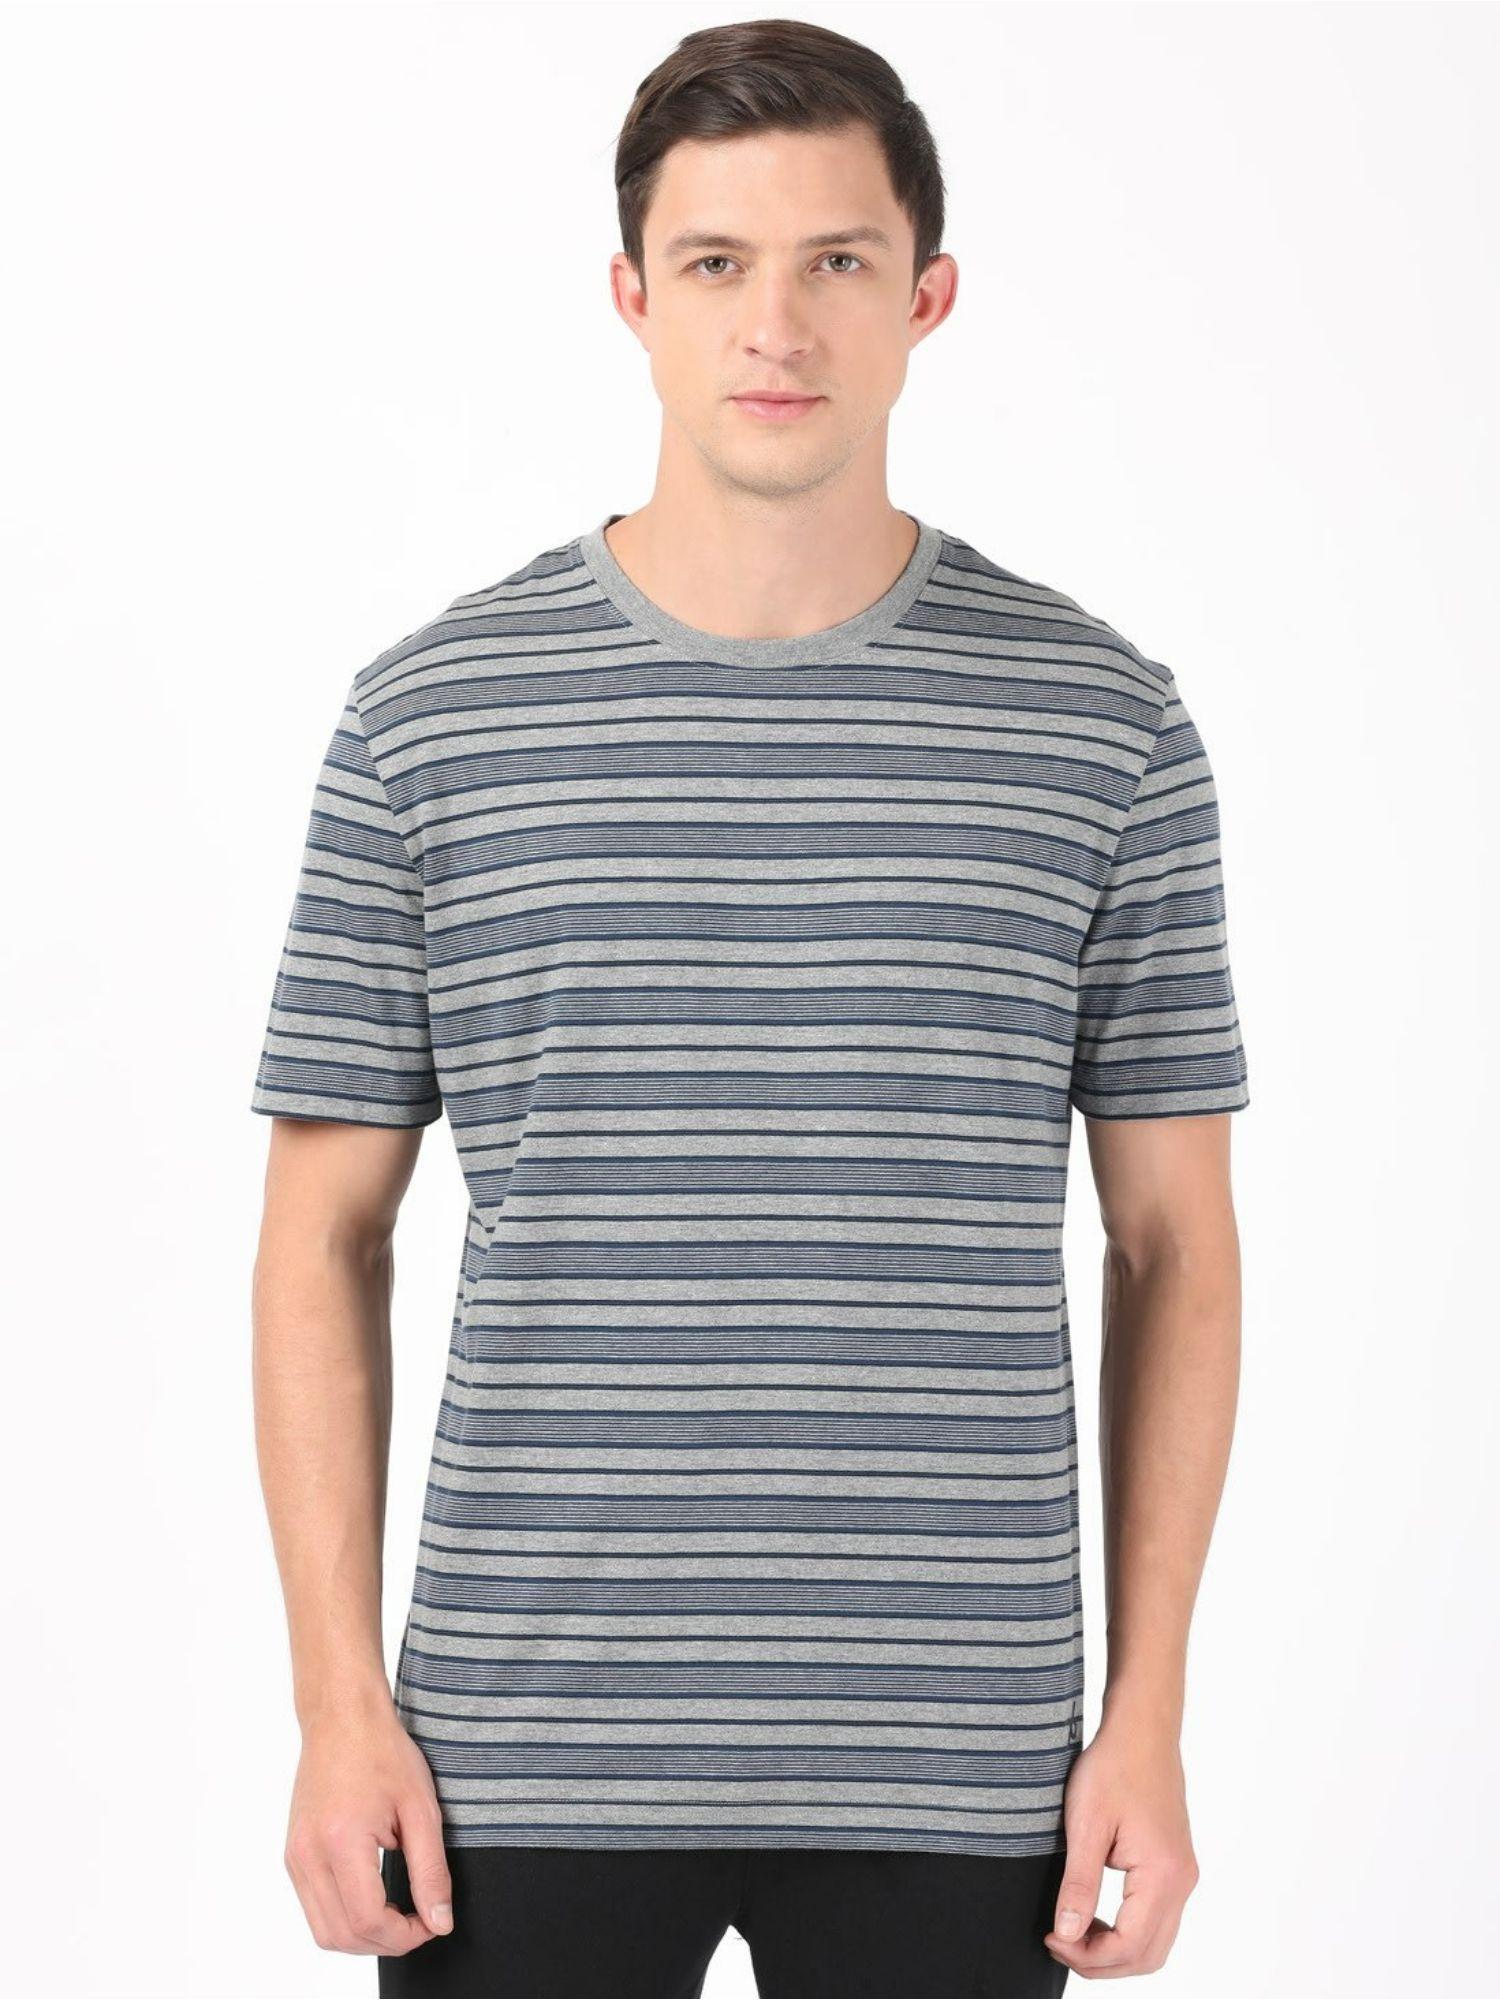 2715-mens-super-combed-cotton-rich-striped-round-neck-half-sleeve-t-shirt-grey-&-blue